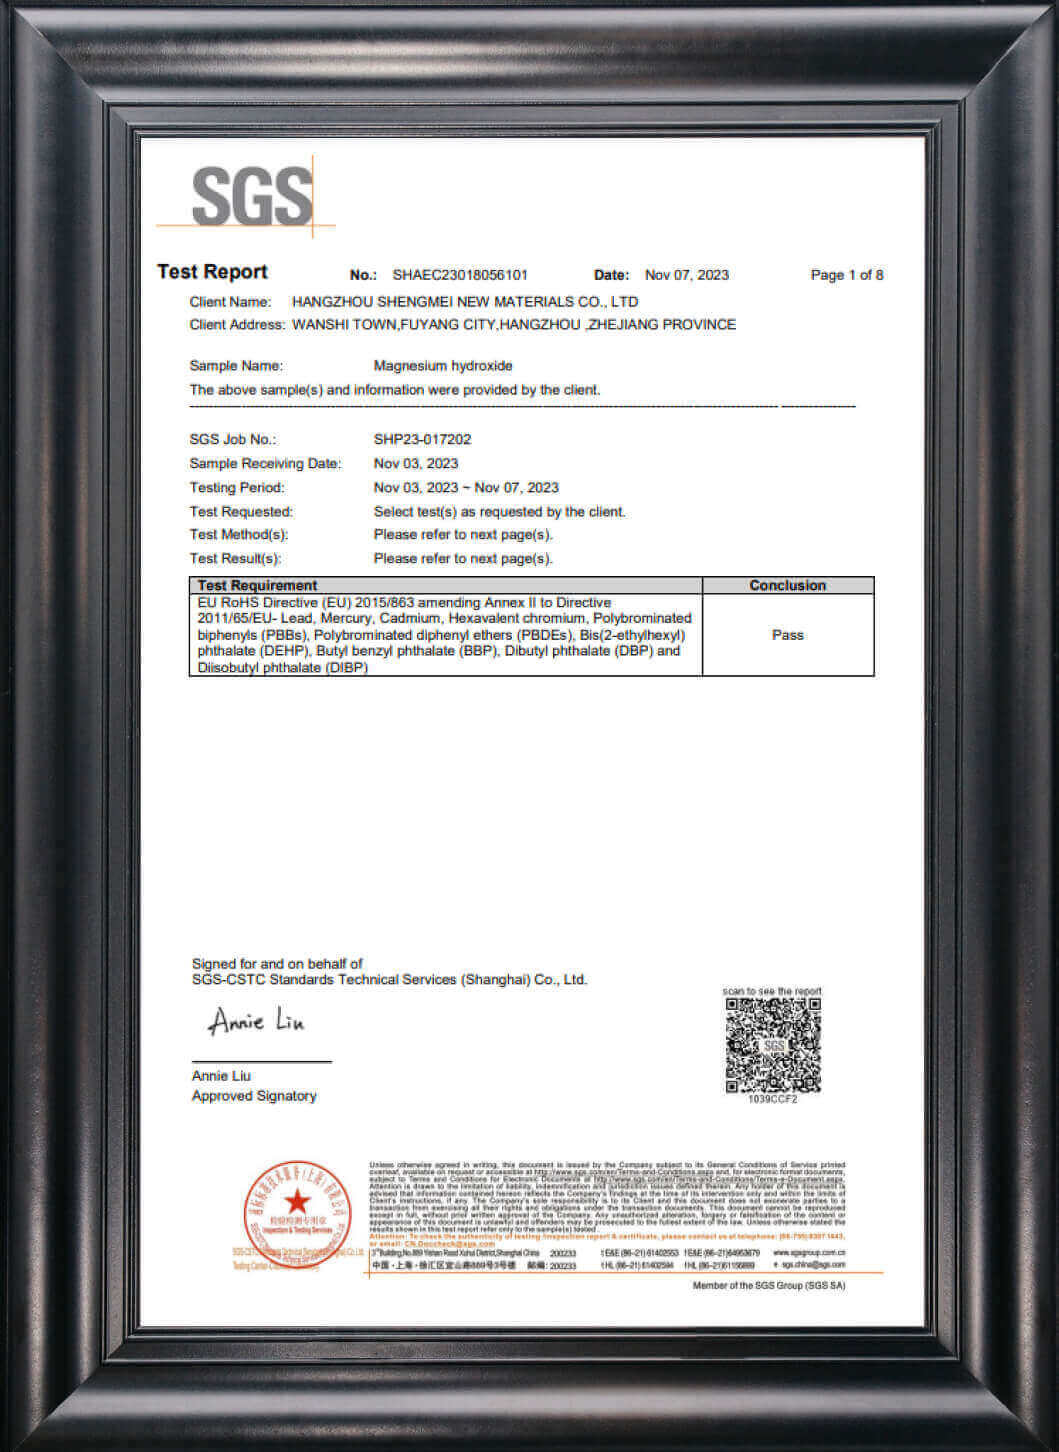 Hangzhou Shengmagnesium New Materials Co., Ltd.